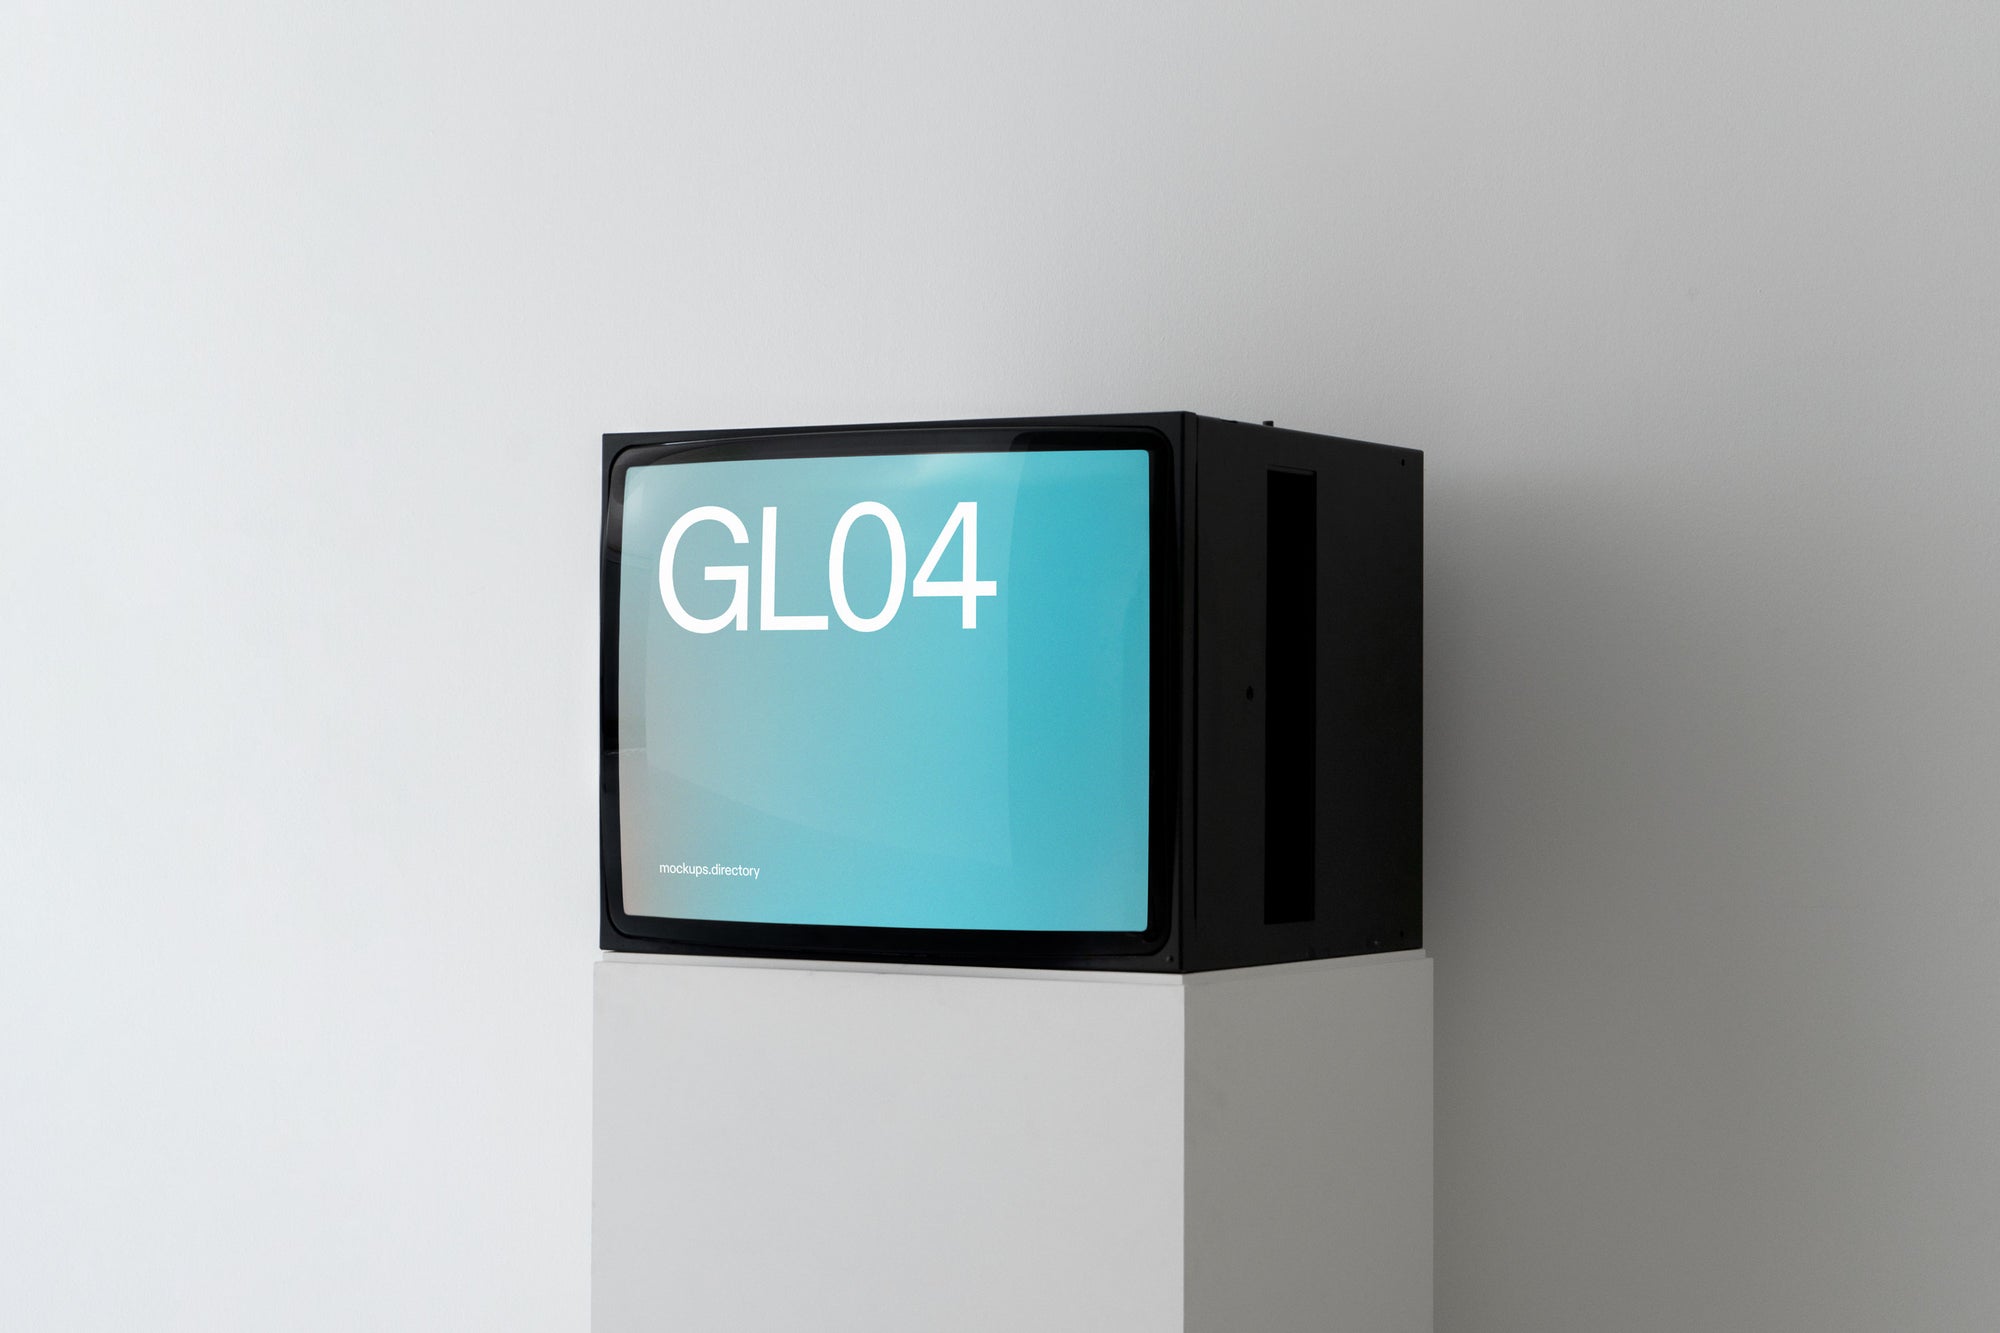 GL04 – Analogue TV